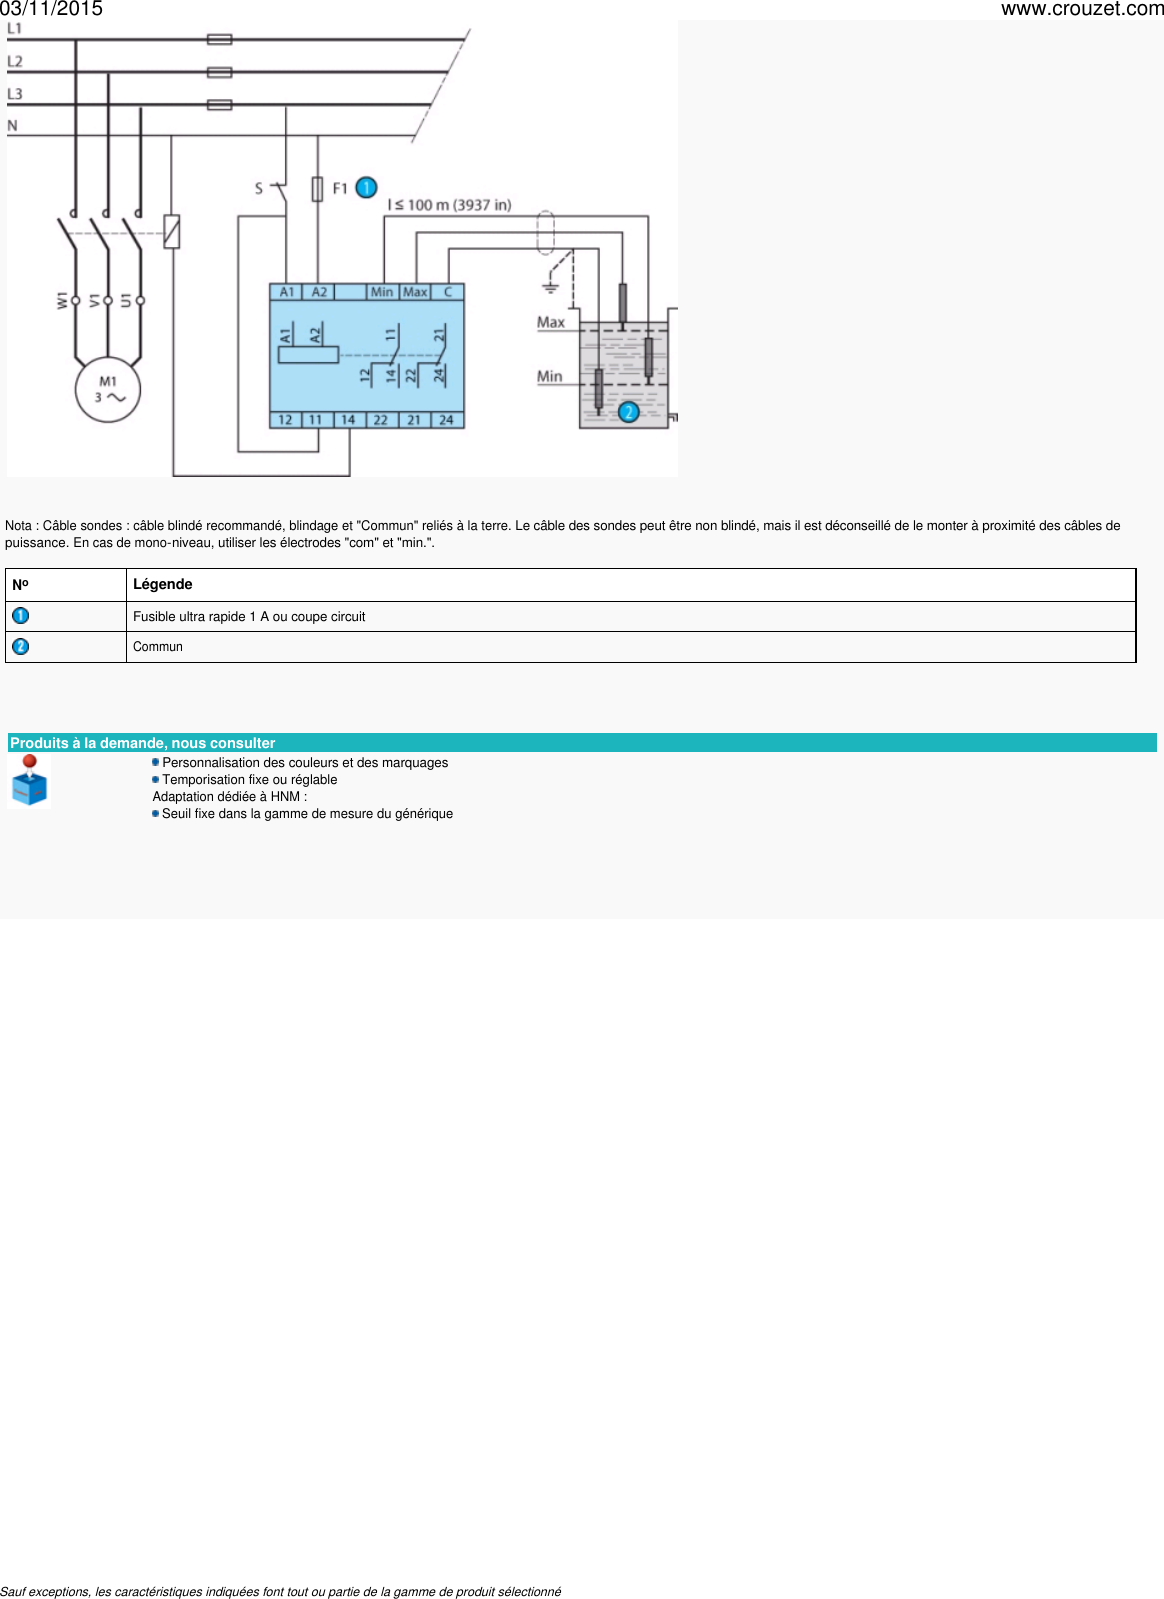 Page 6 of 6 - Relais-de-mesure-et-controle-relais-de-mesure-et-controle-de-niveau-montage-rail-din-35-mm-hnm-Ref-84870700